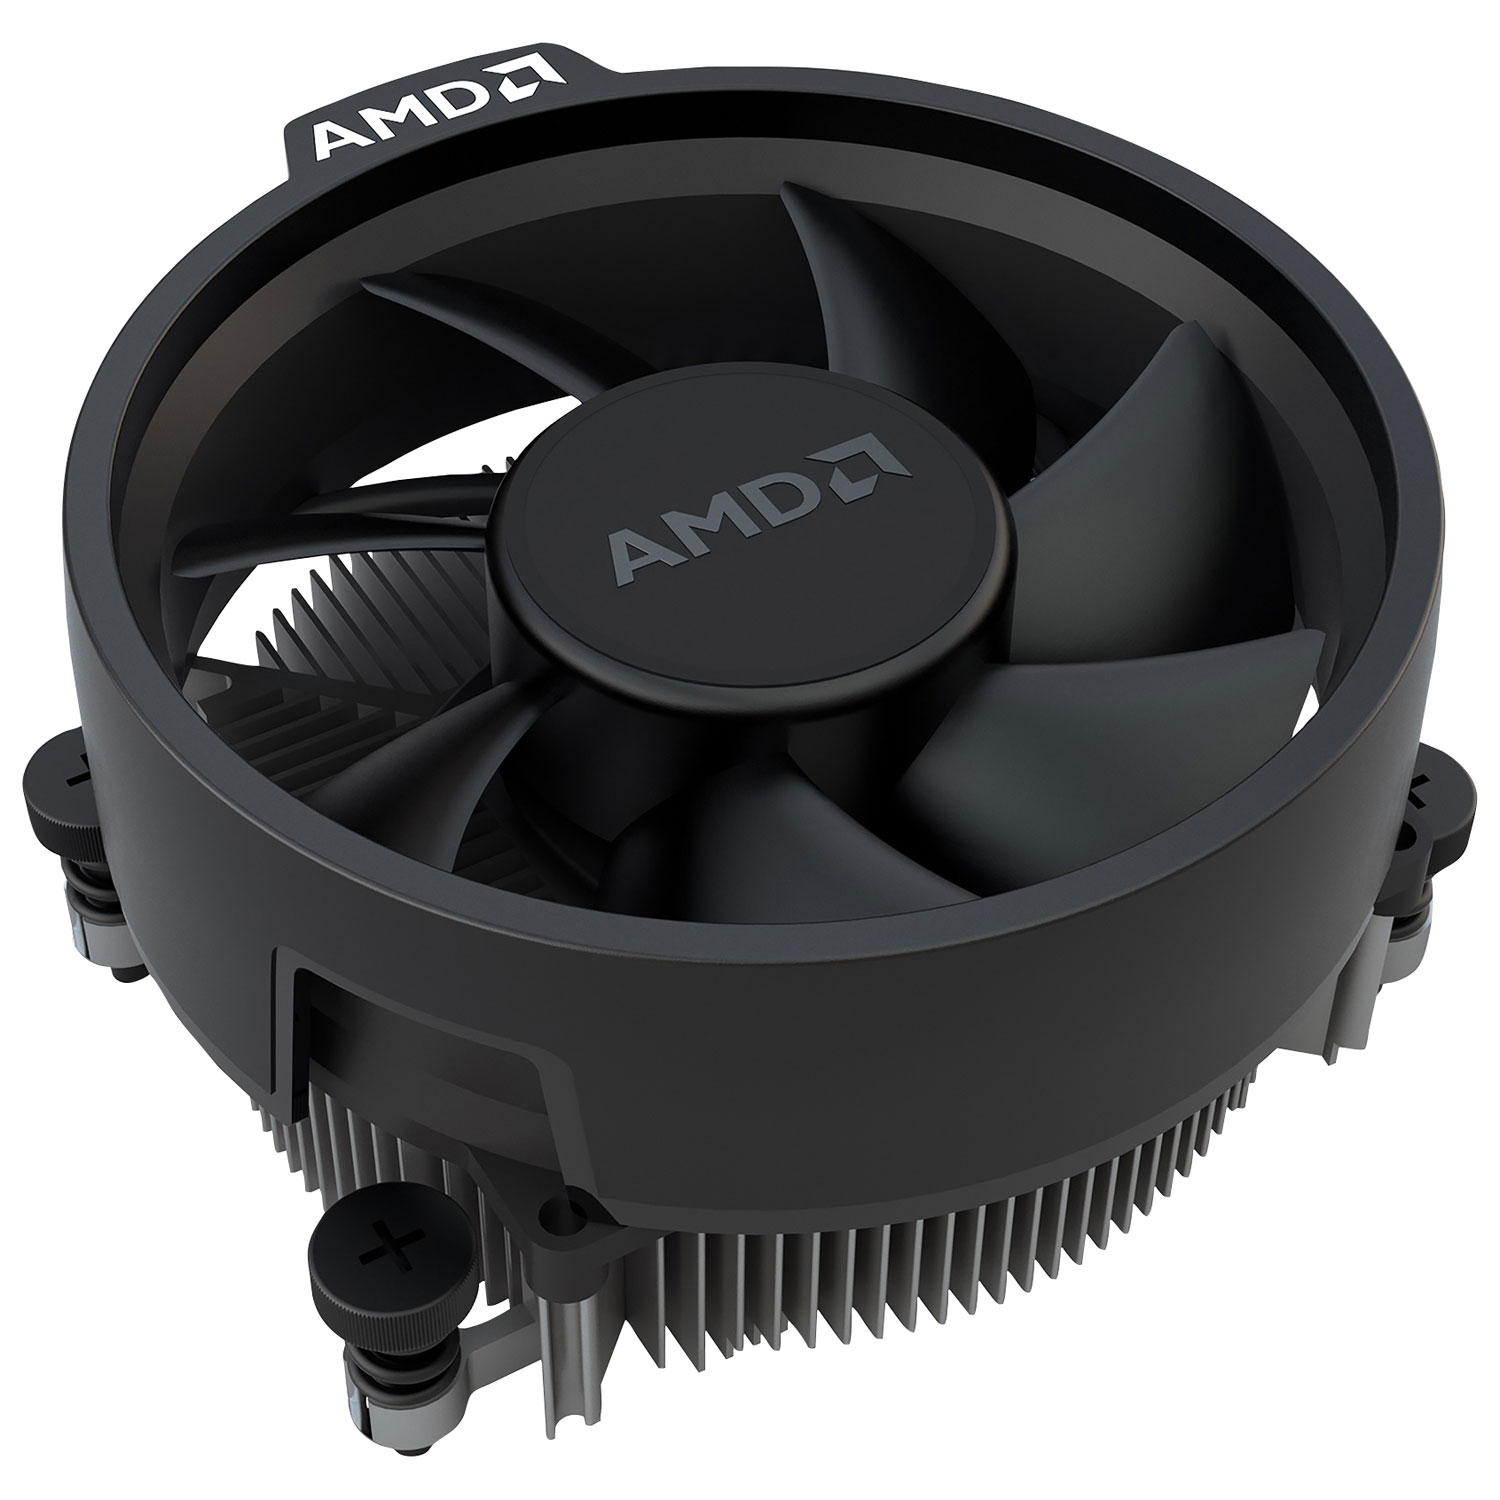 AMD Ryzen 5 5600X Hexa-Core 3.7GHz AM4 Desktop Processor | Best